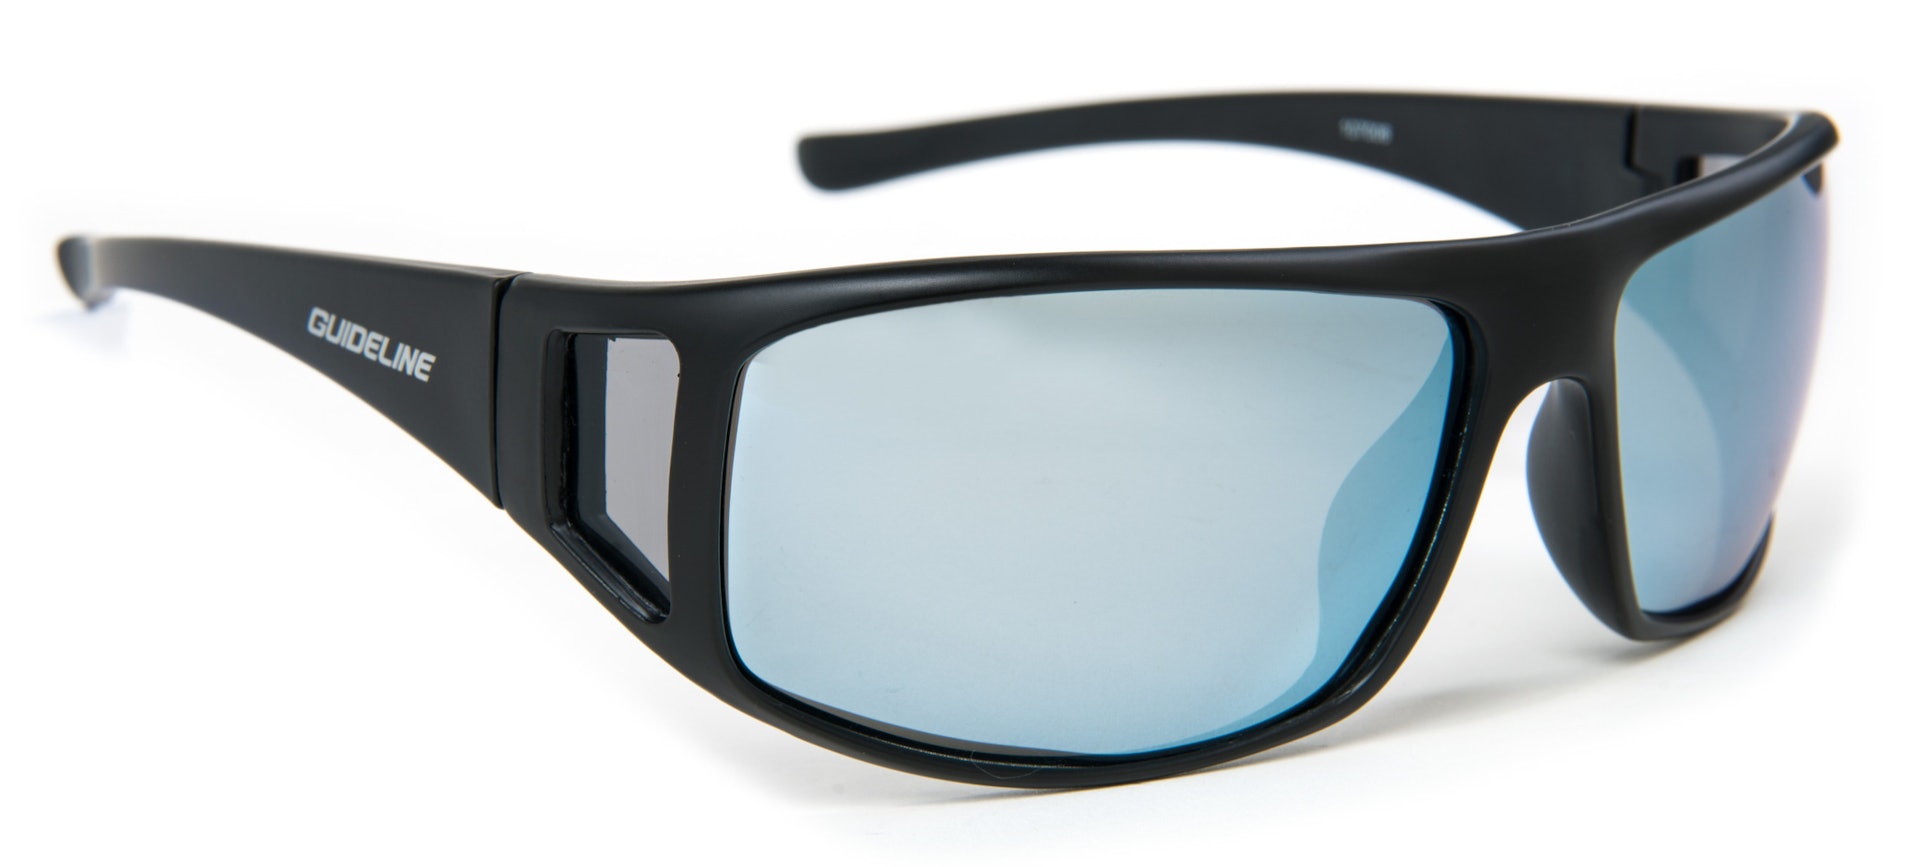 Tactical Sunglasses - Grey Lens (slide 1 of 1)